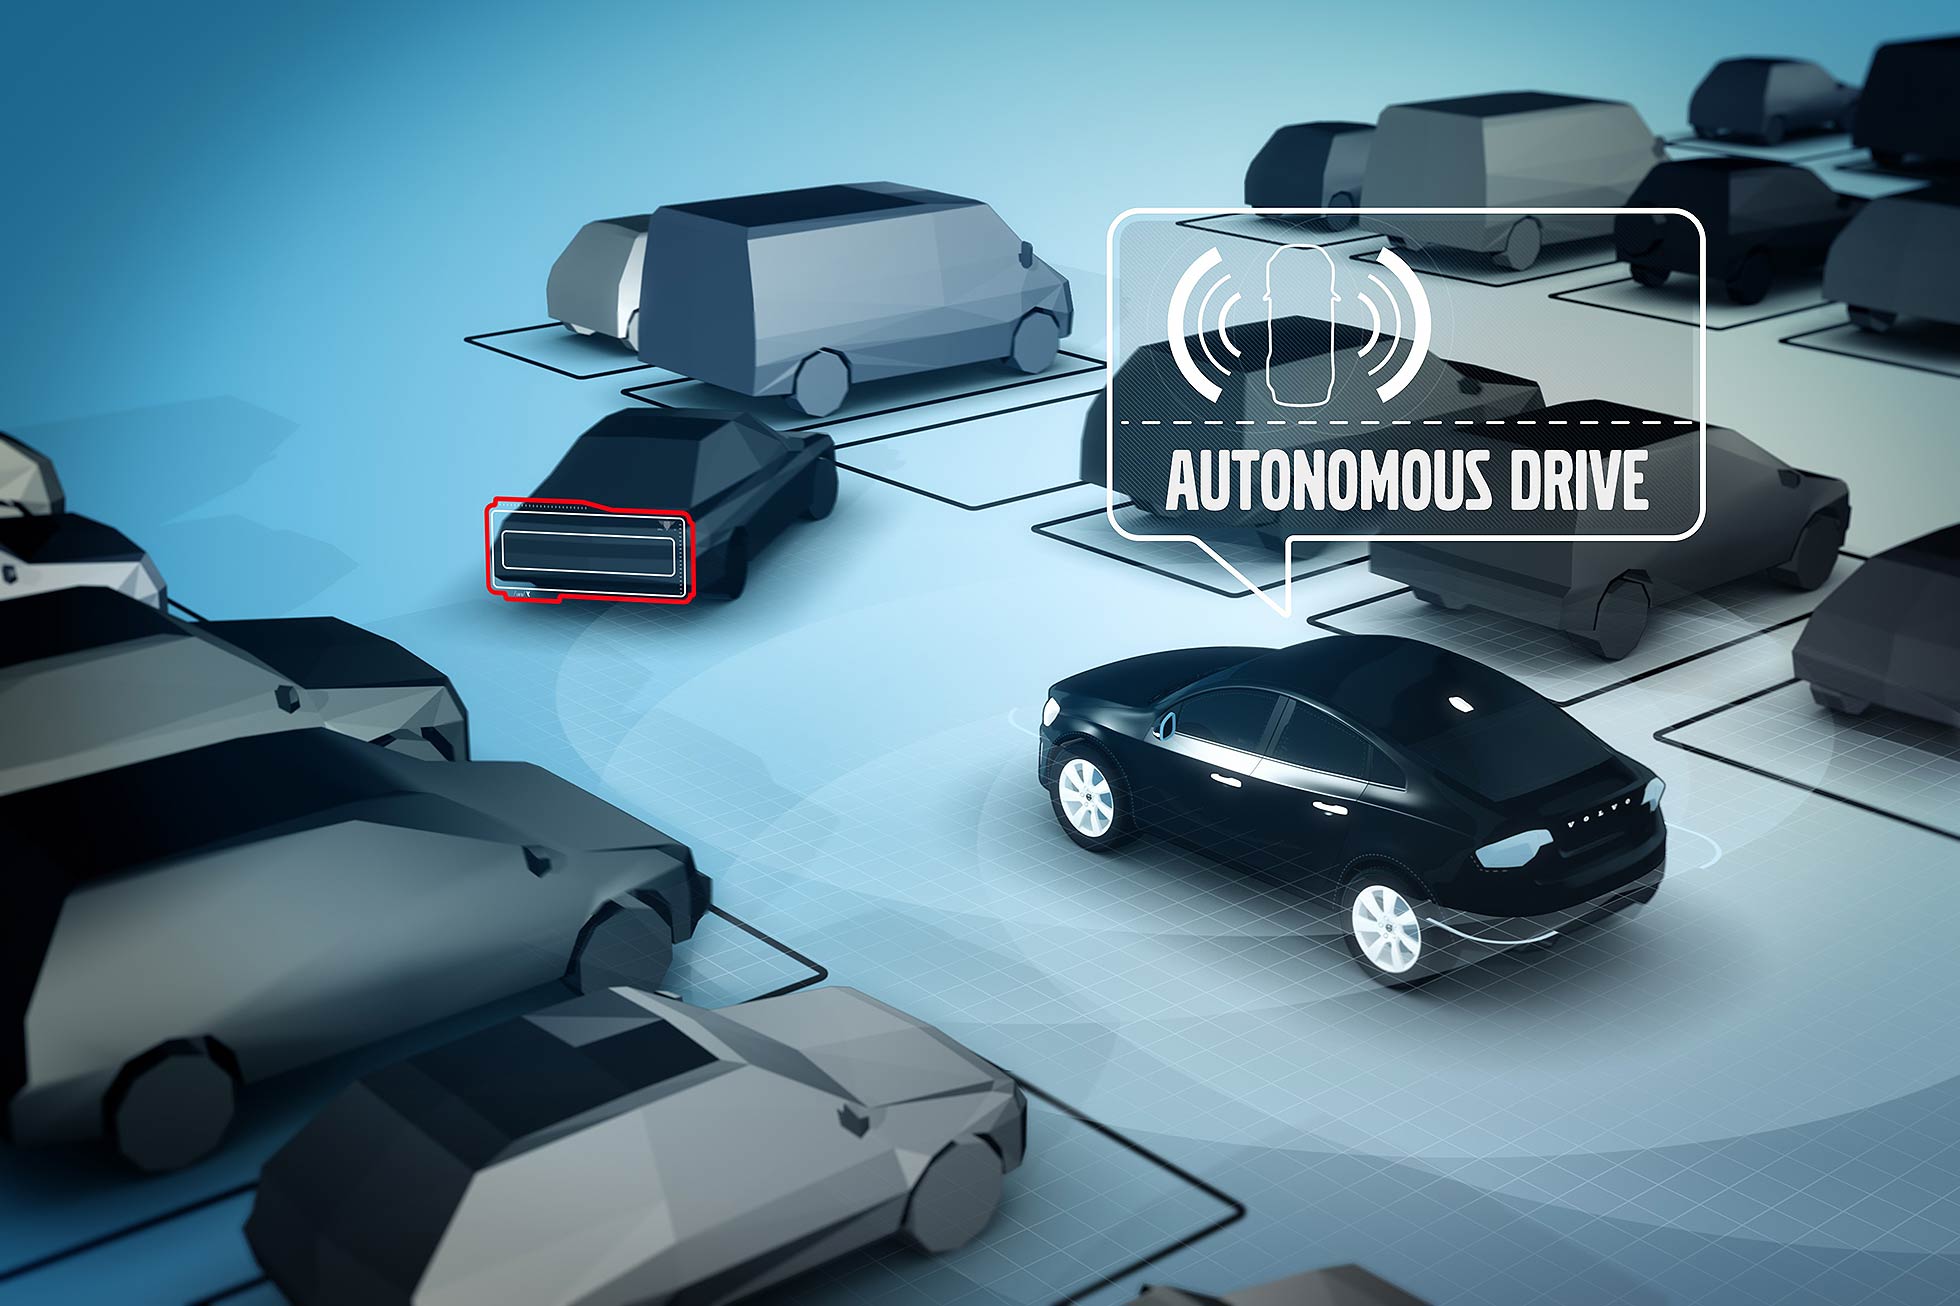 Parking lots: Why autonomous cars could save acres of space